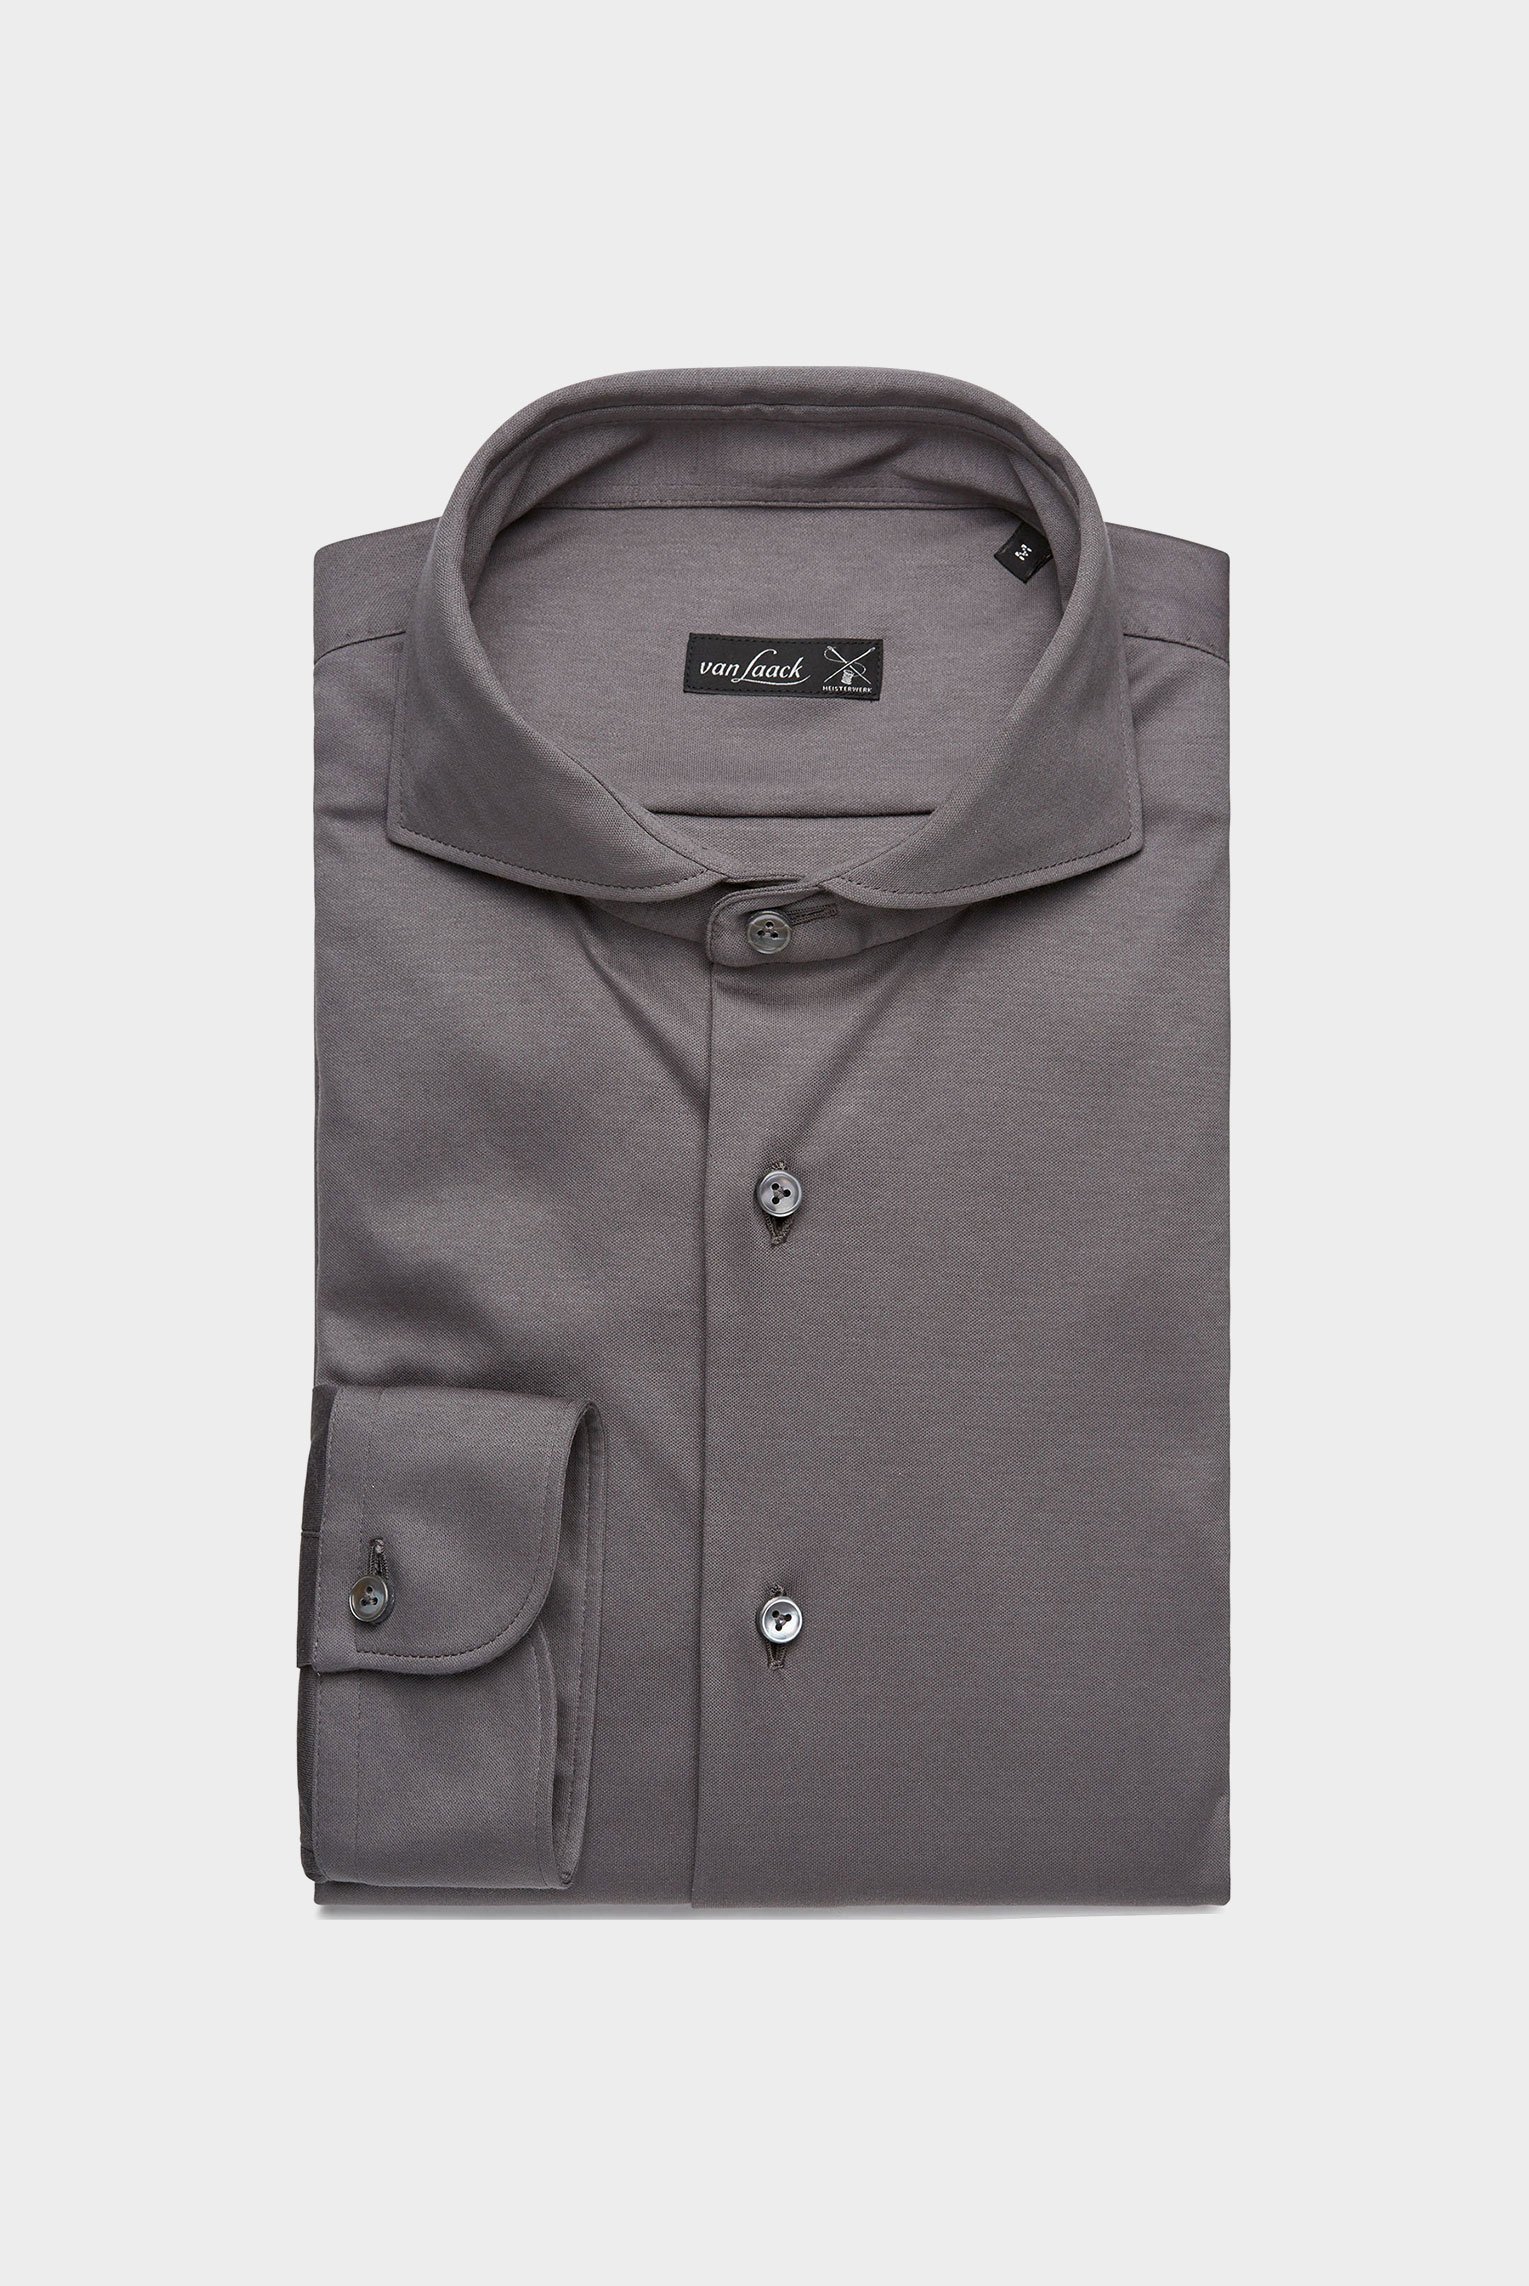 Casual Hemden+Jersey Hemd aus Schweizer Baumwolle Tailor Fit+20.1683.UC.180031.070.L